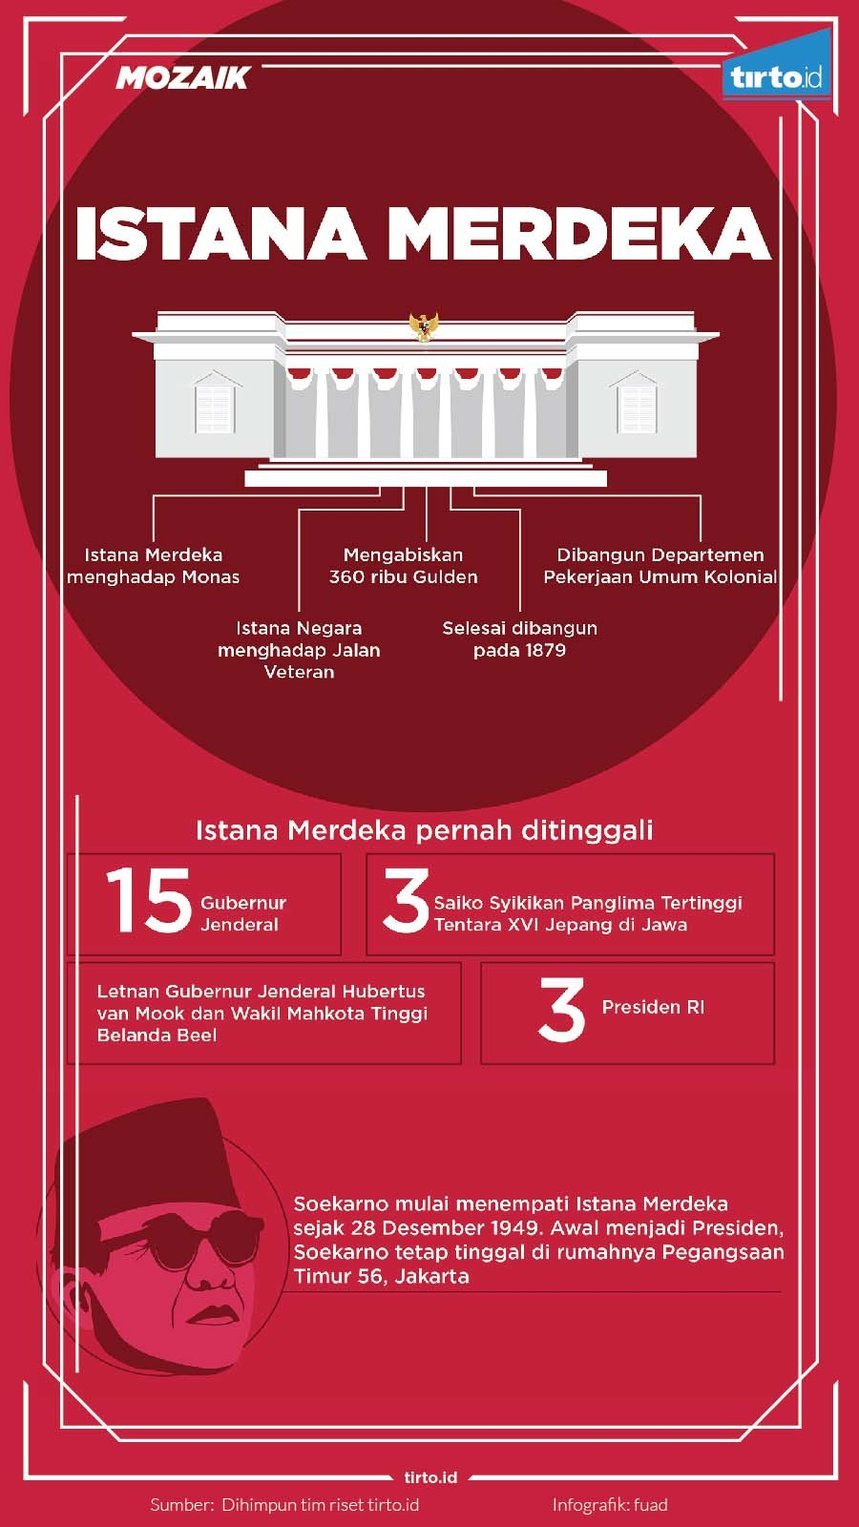 Infografik Mozaik Istana Merdeka